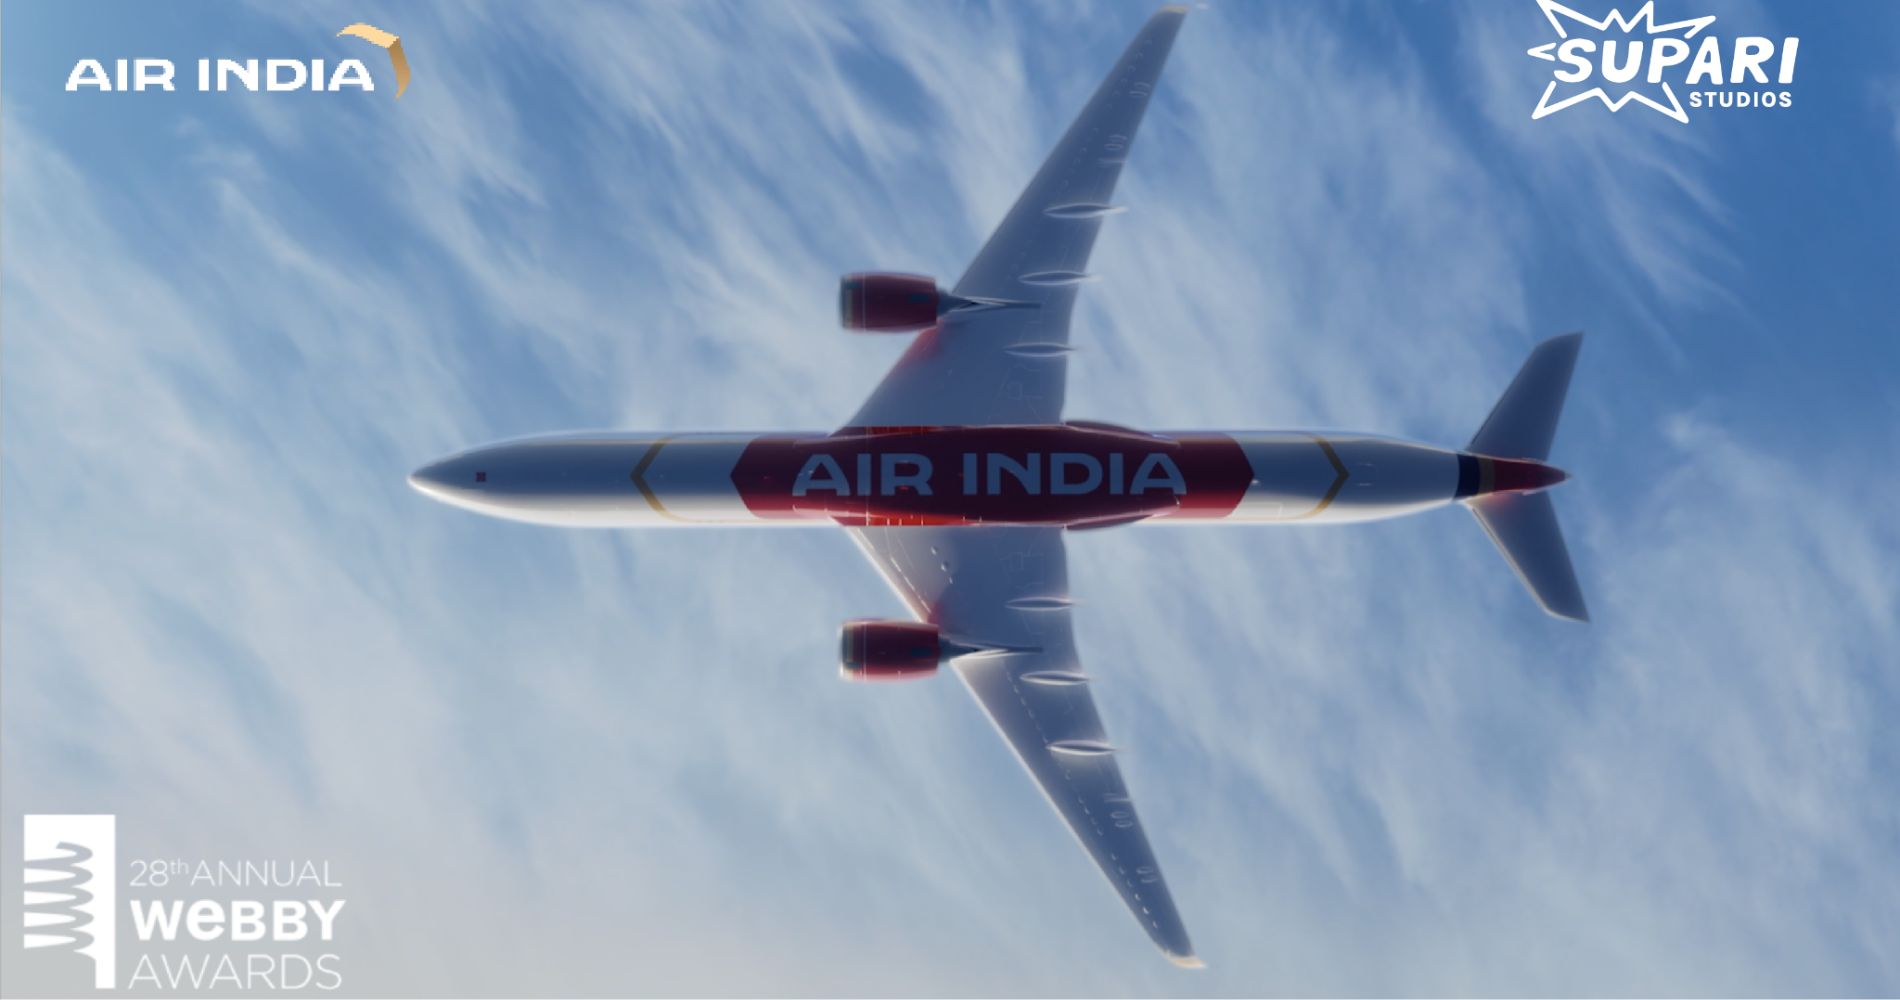 Air India And Supari Studios Receive Webby Award For Inspirational